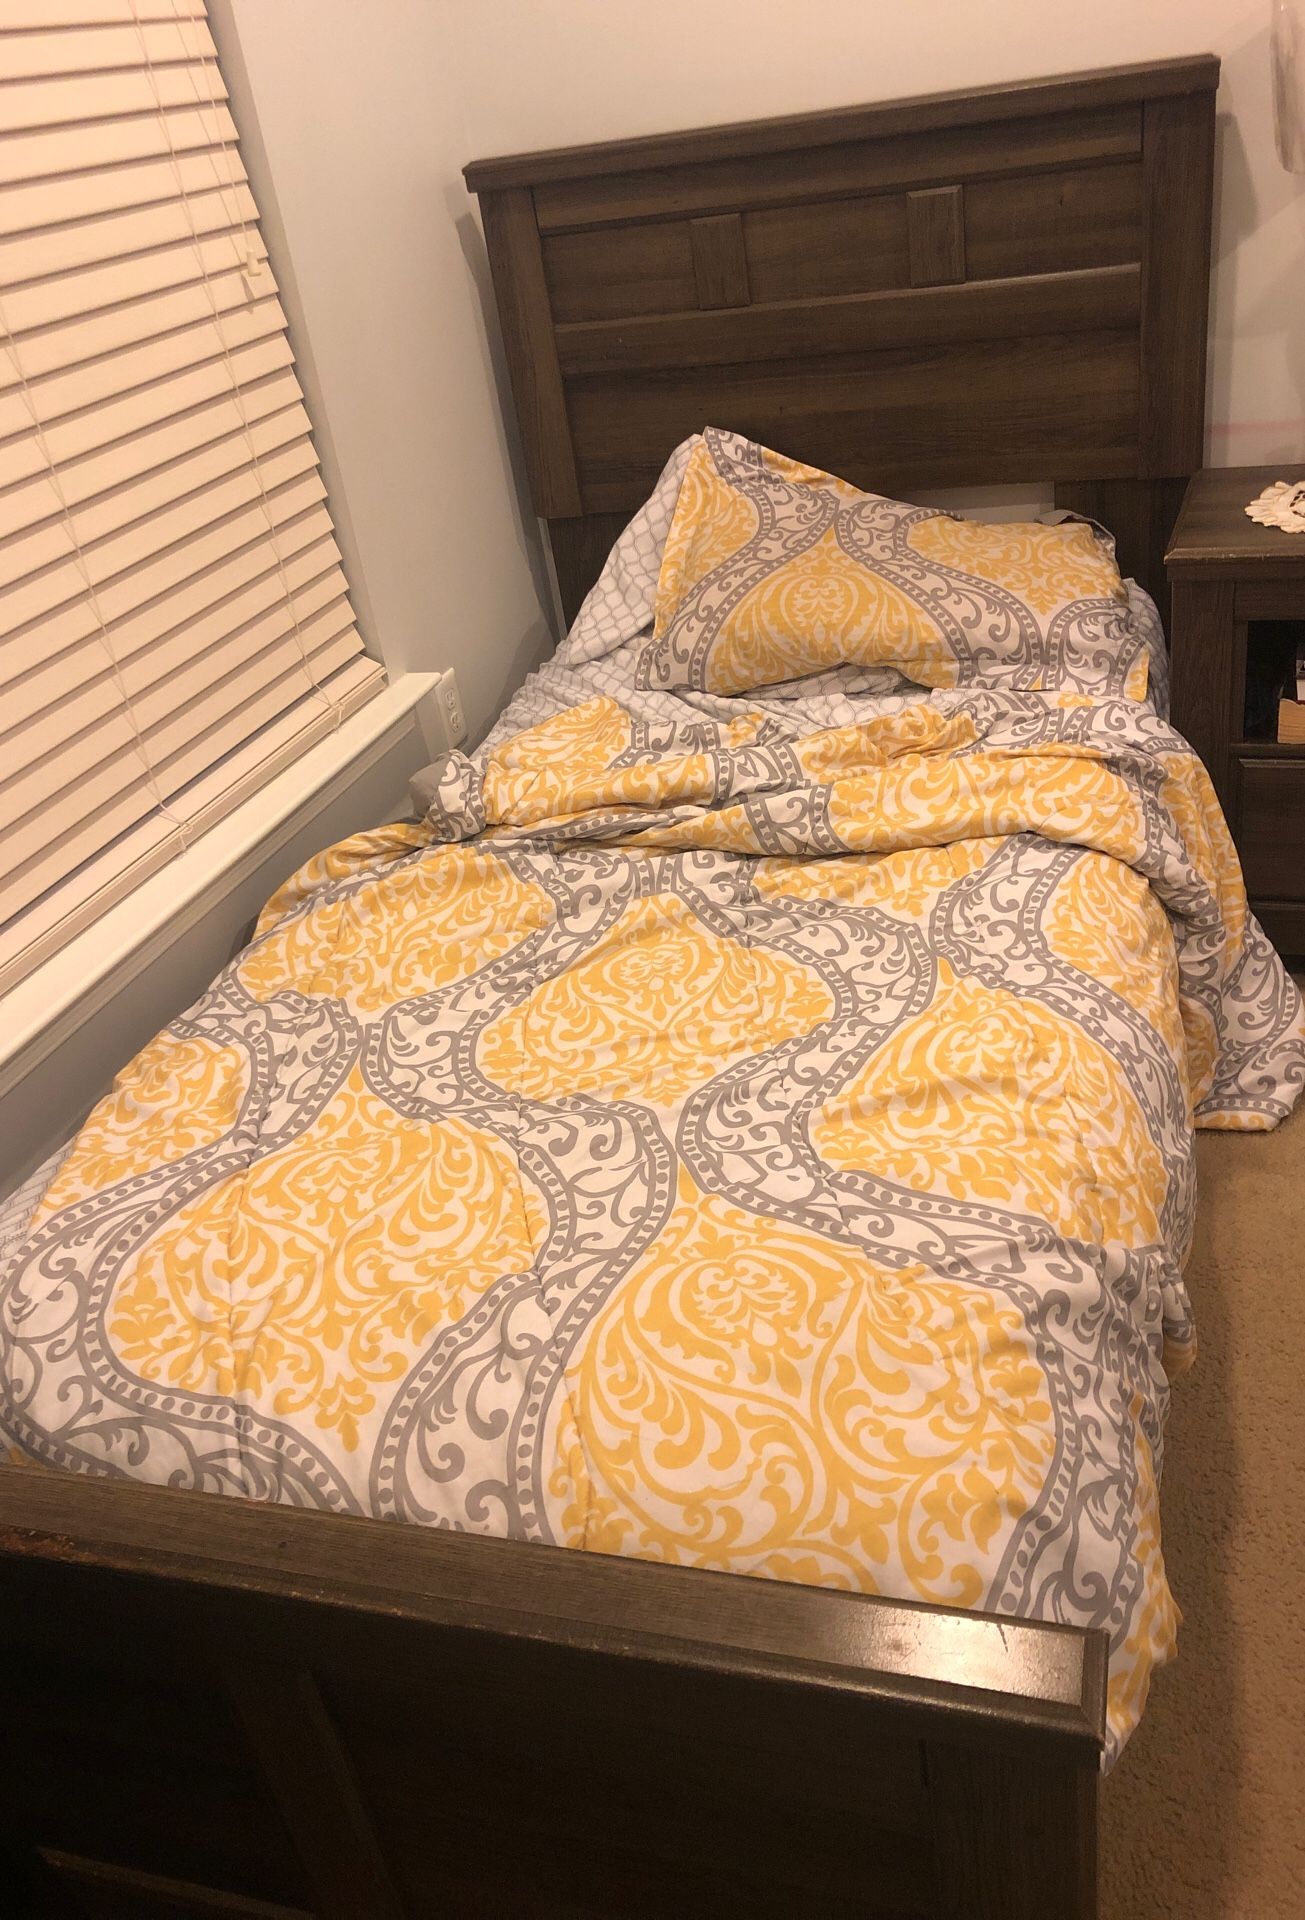 1 twin bed (no mattress)